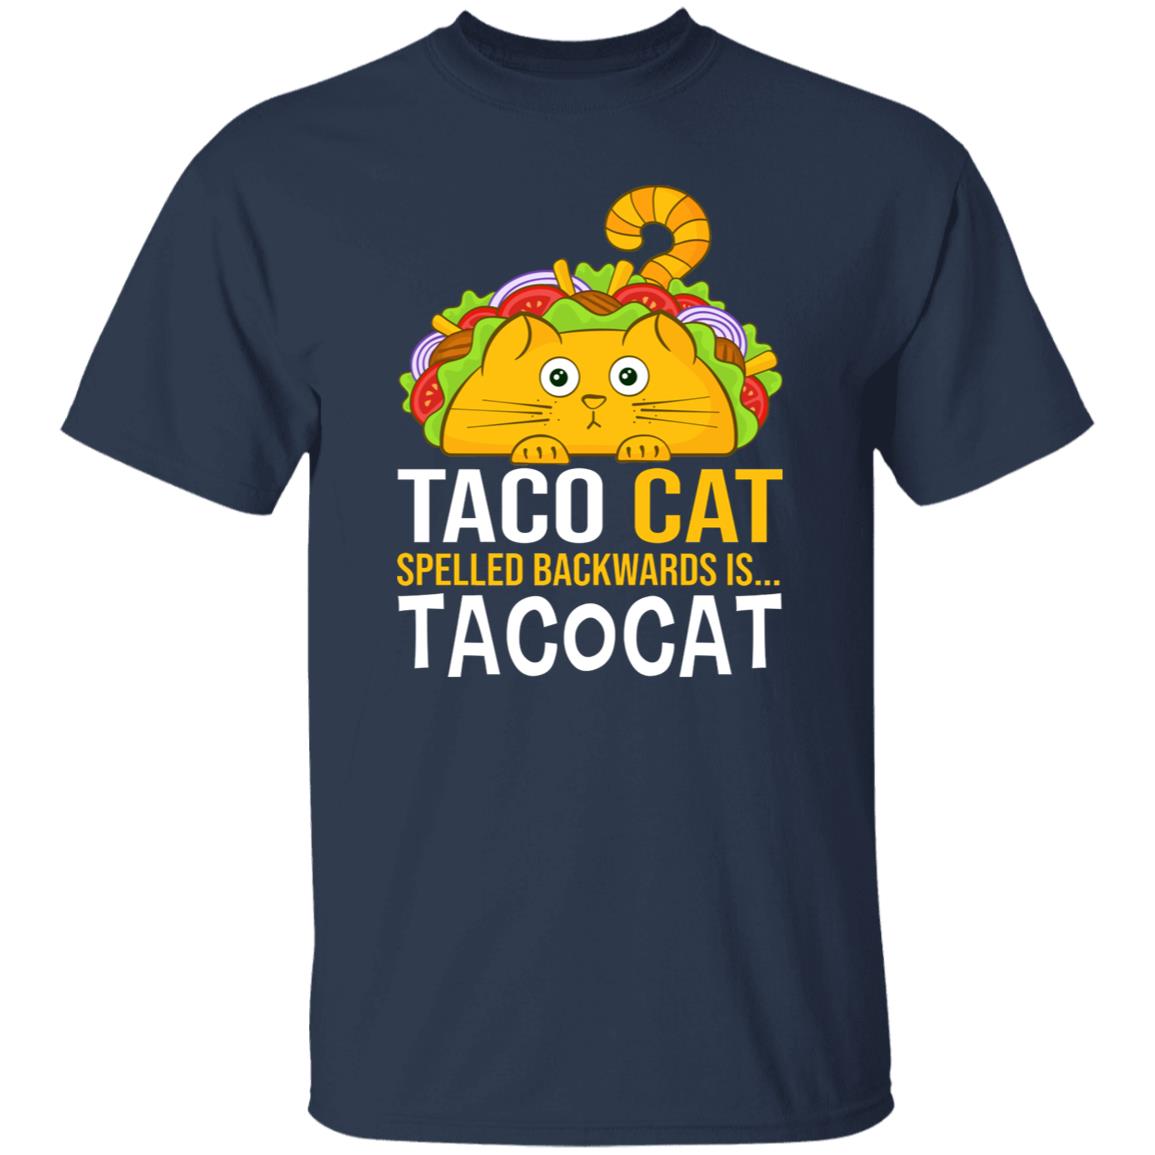 Taco Cat Spelled backwards T-Shirt gift Taco lover Cat mom Unisex Tee Black Navy Dark Heather-Family-Gift-Planet